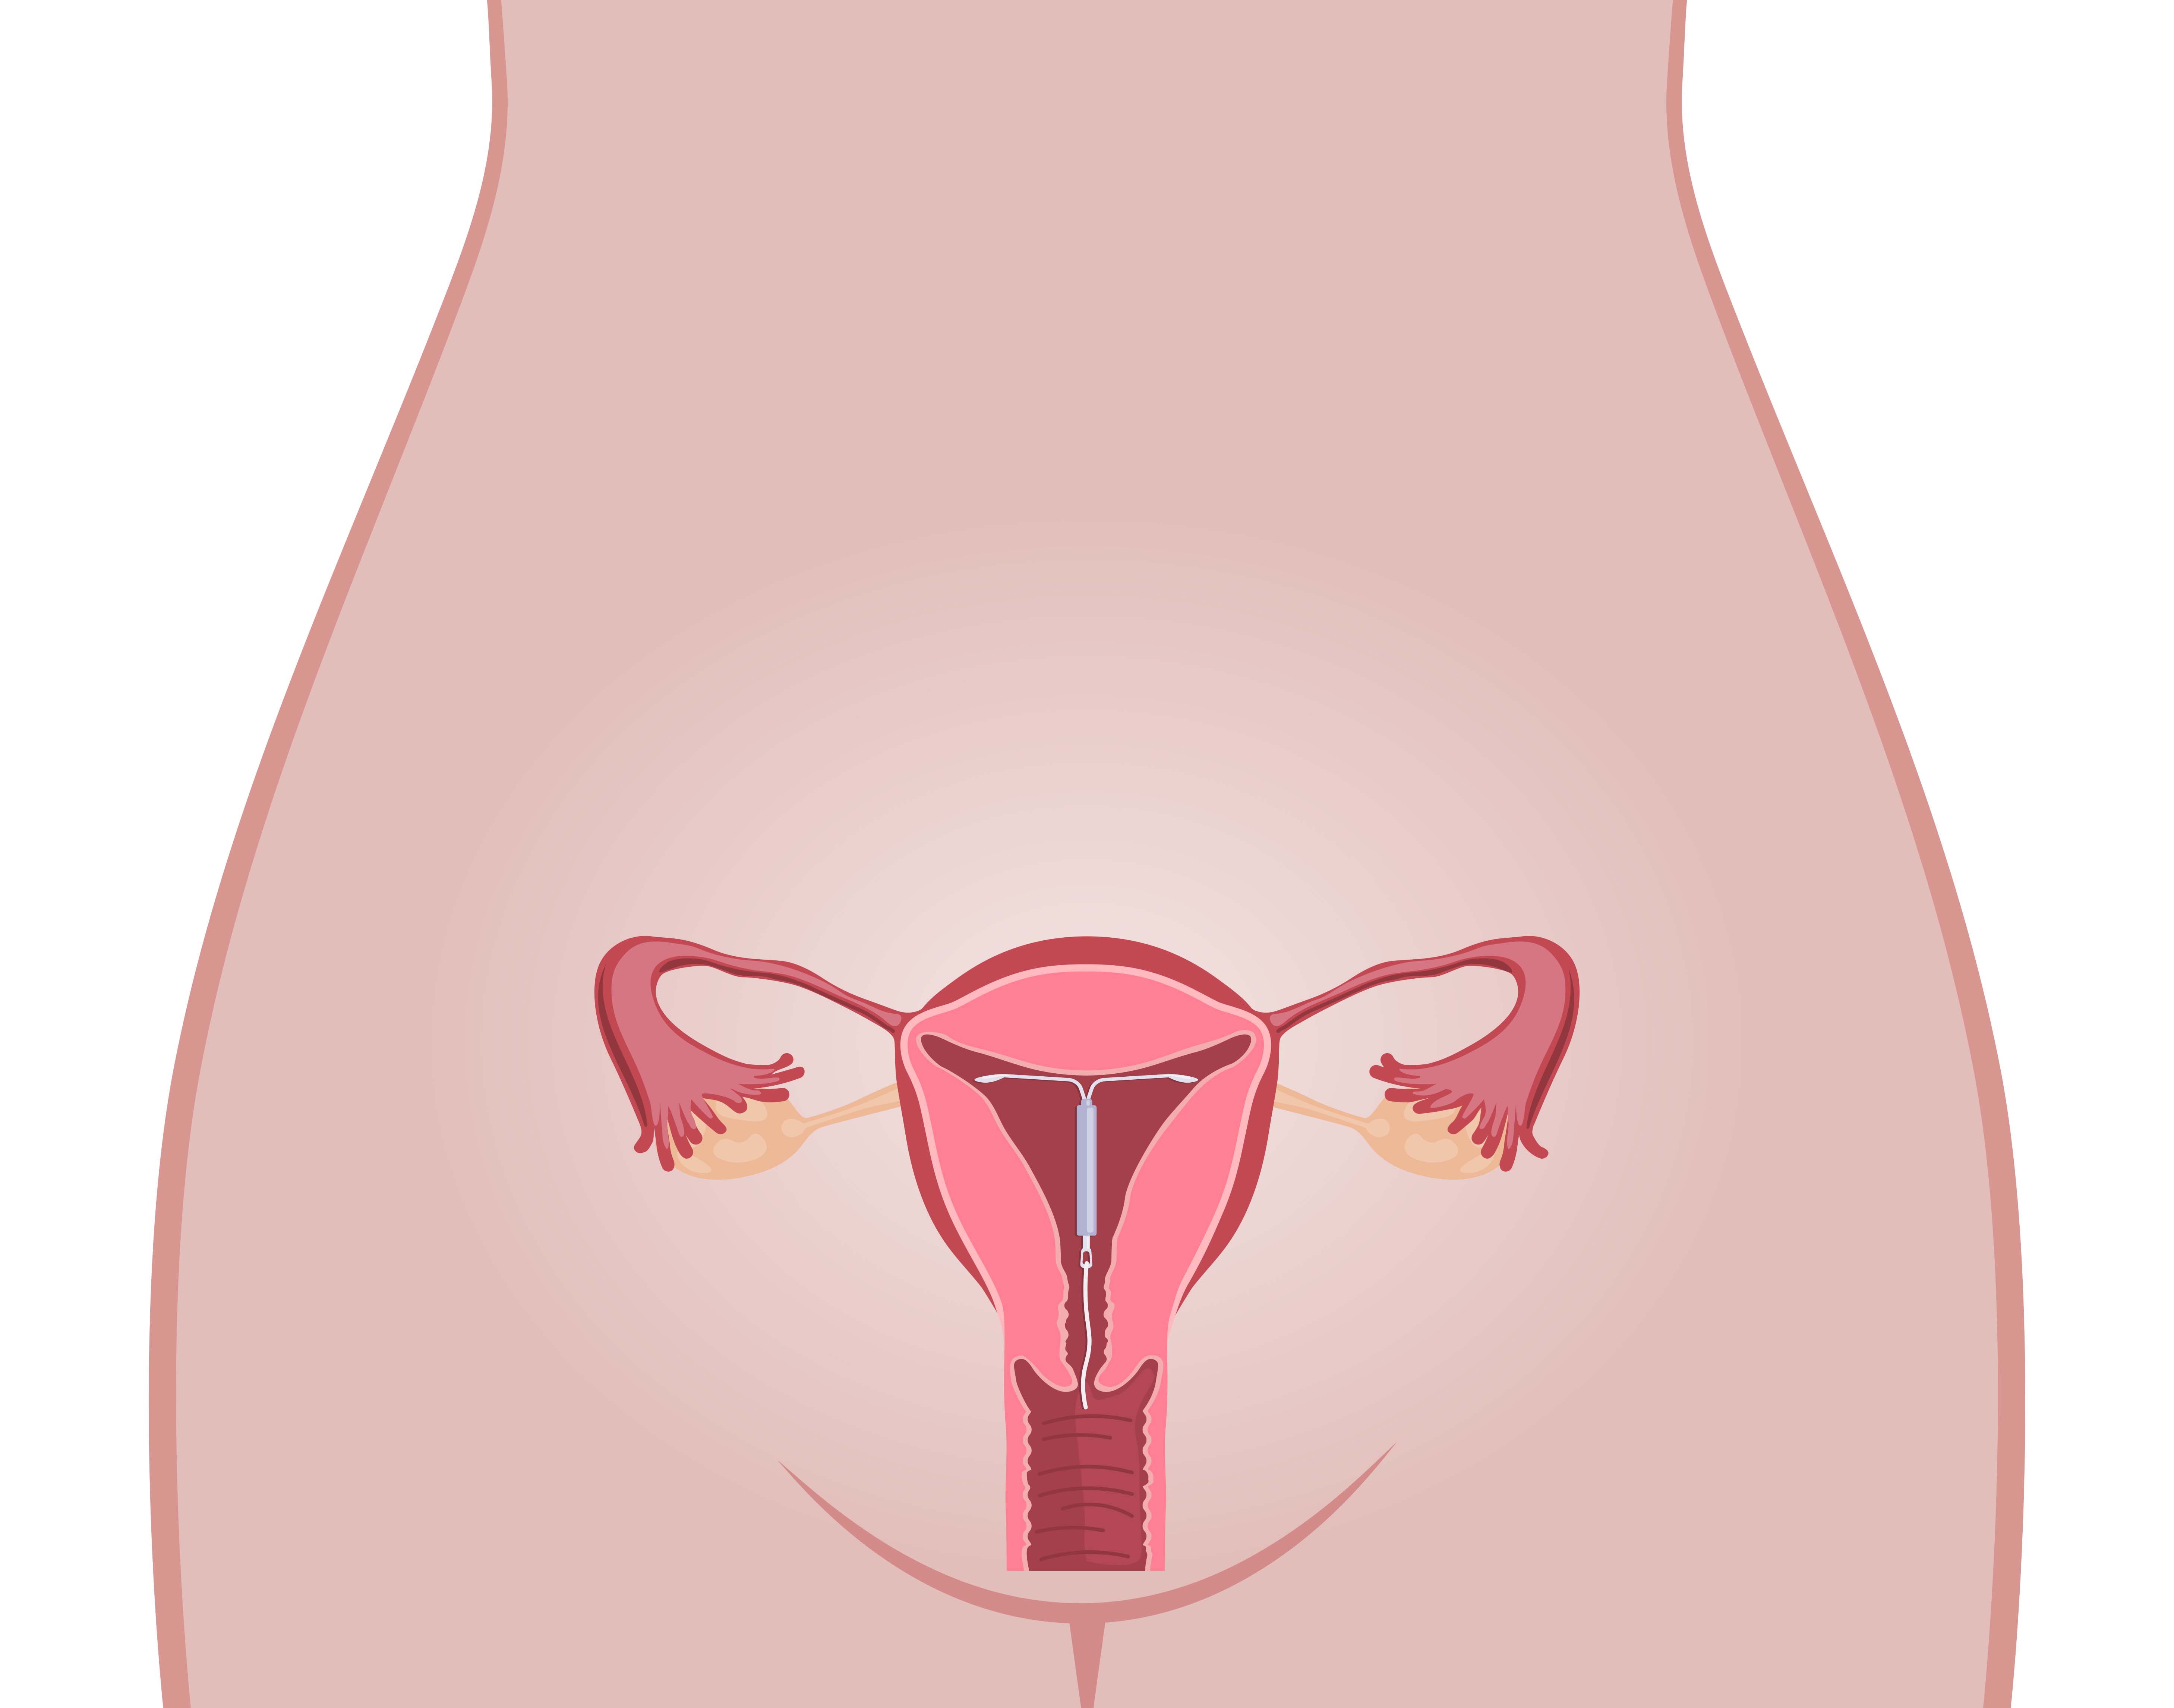 Órgano reproductor femenino